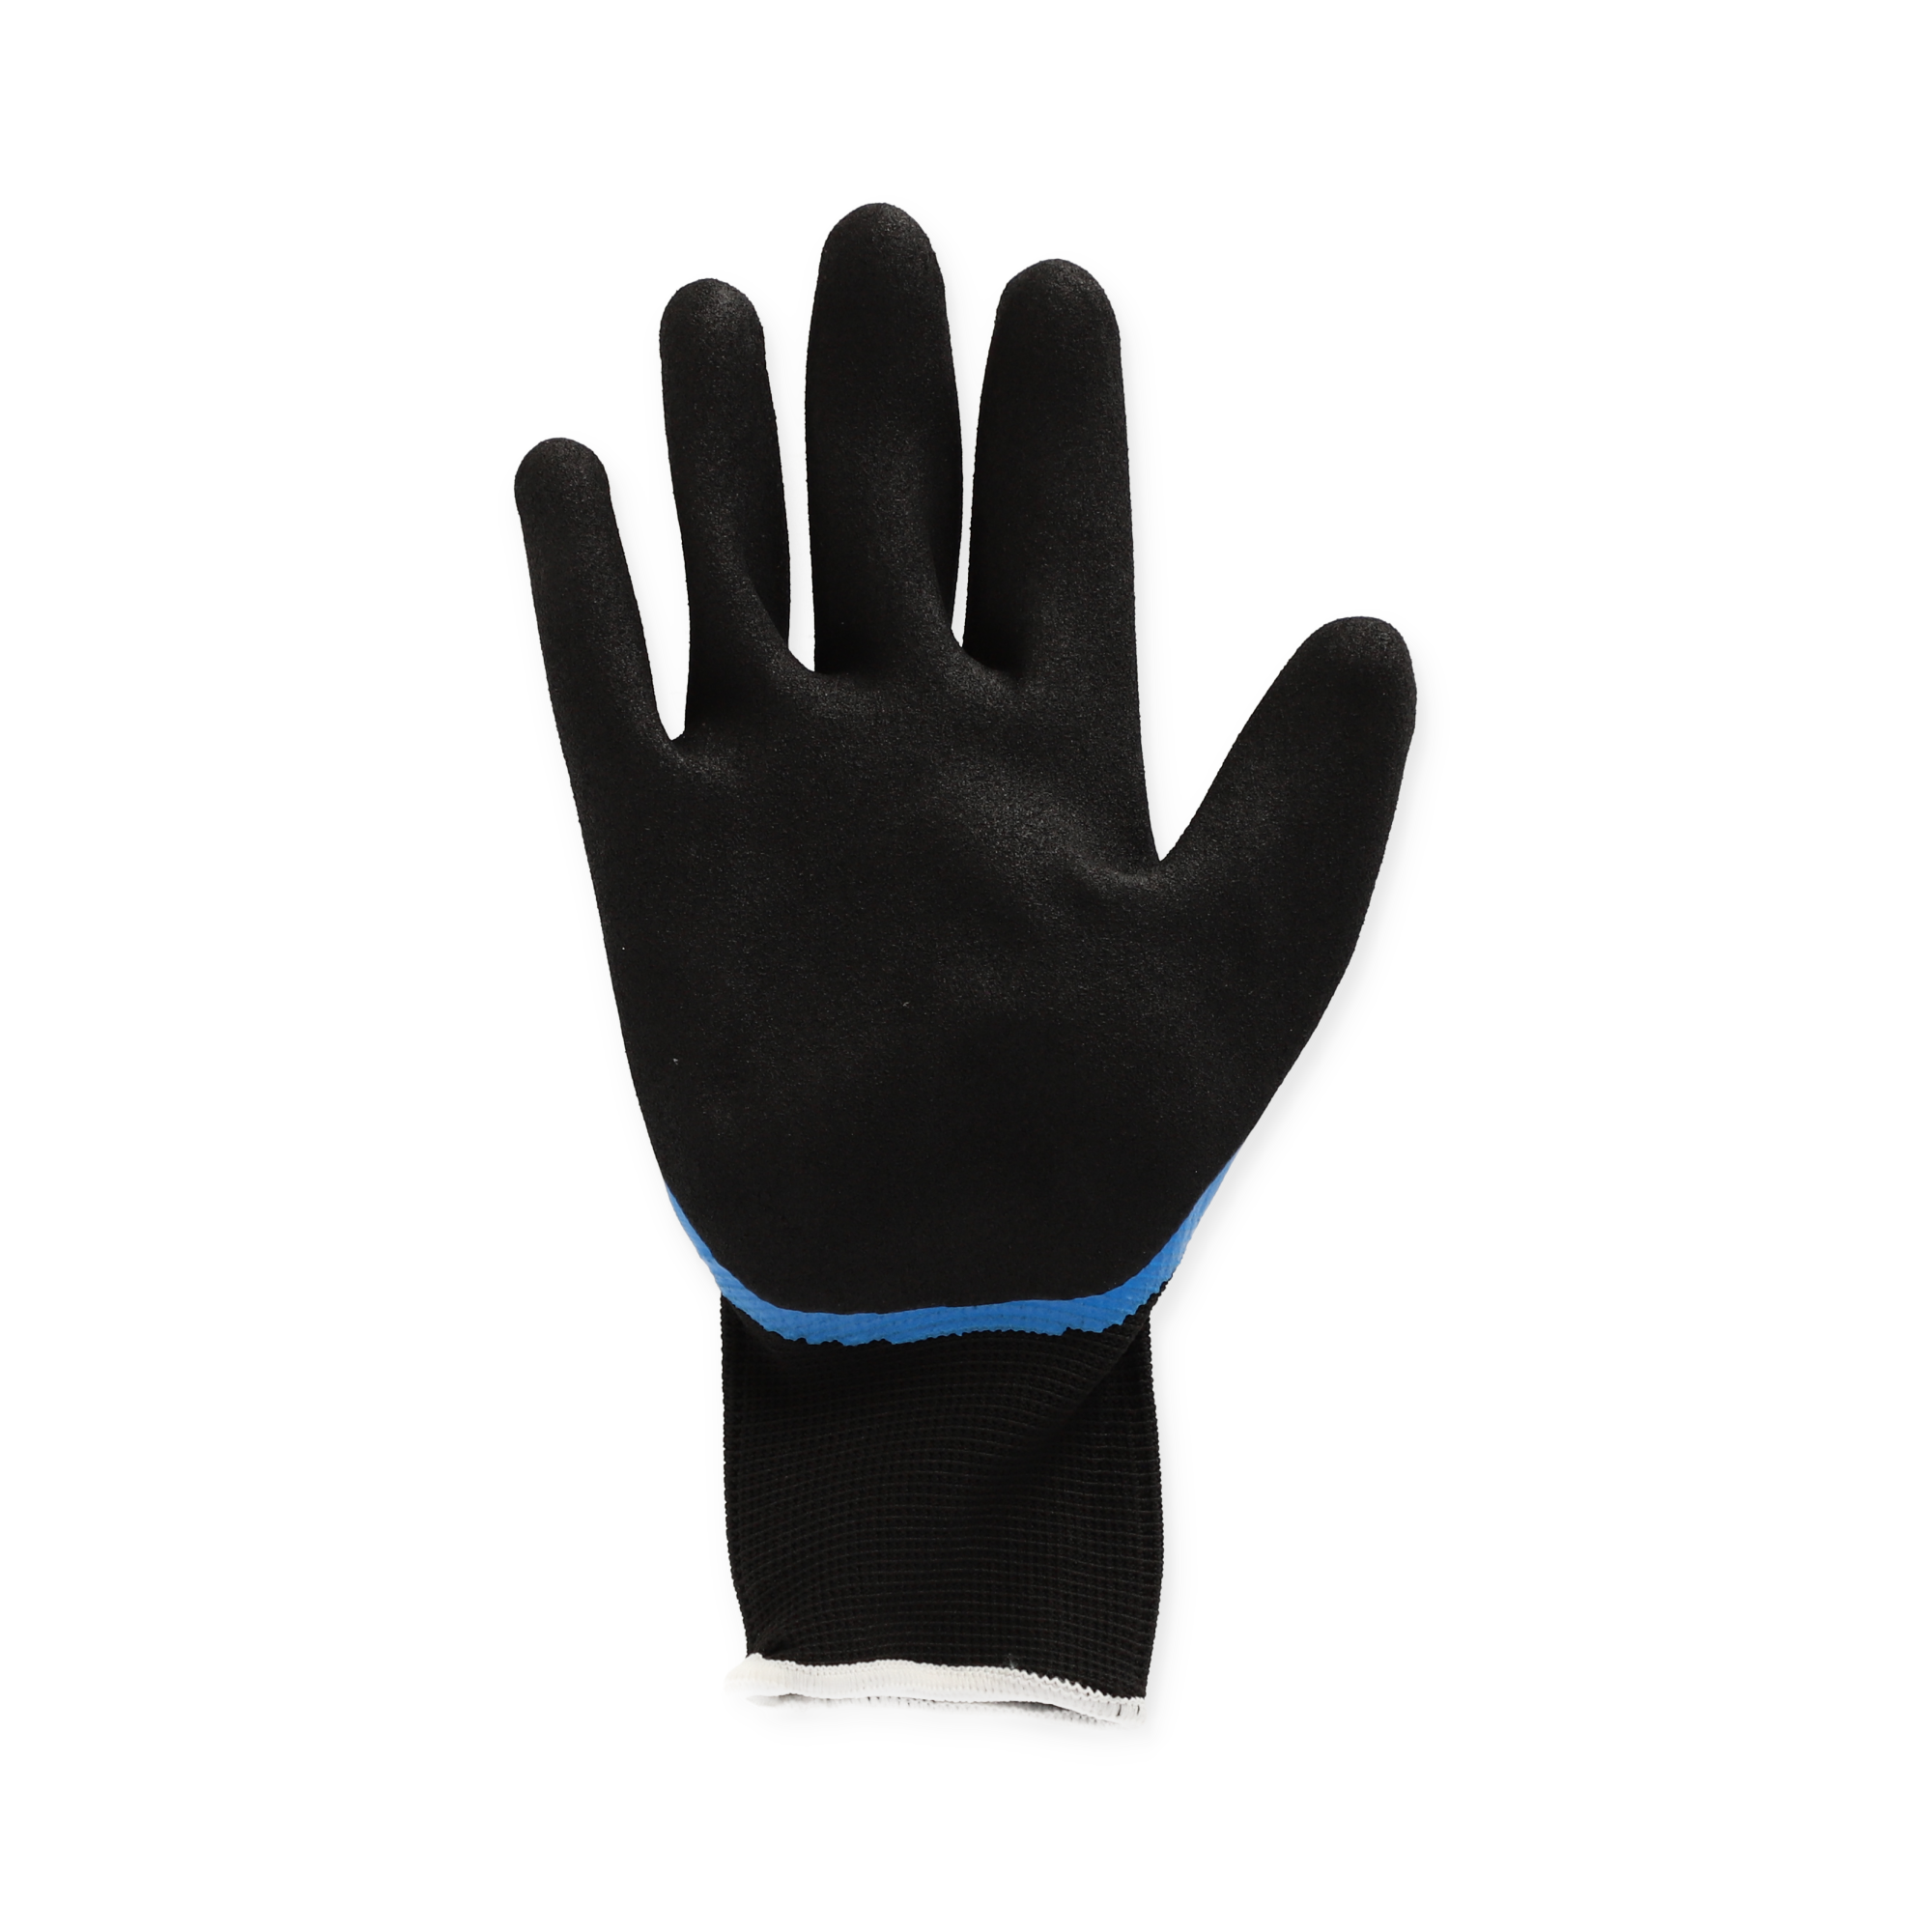 Handschuhe 'Wet Grip' blau Gr. 9 + product picture